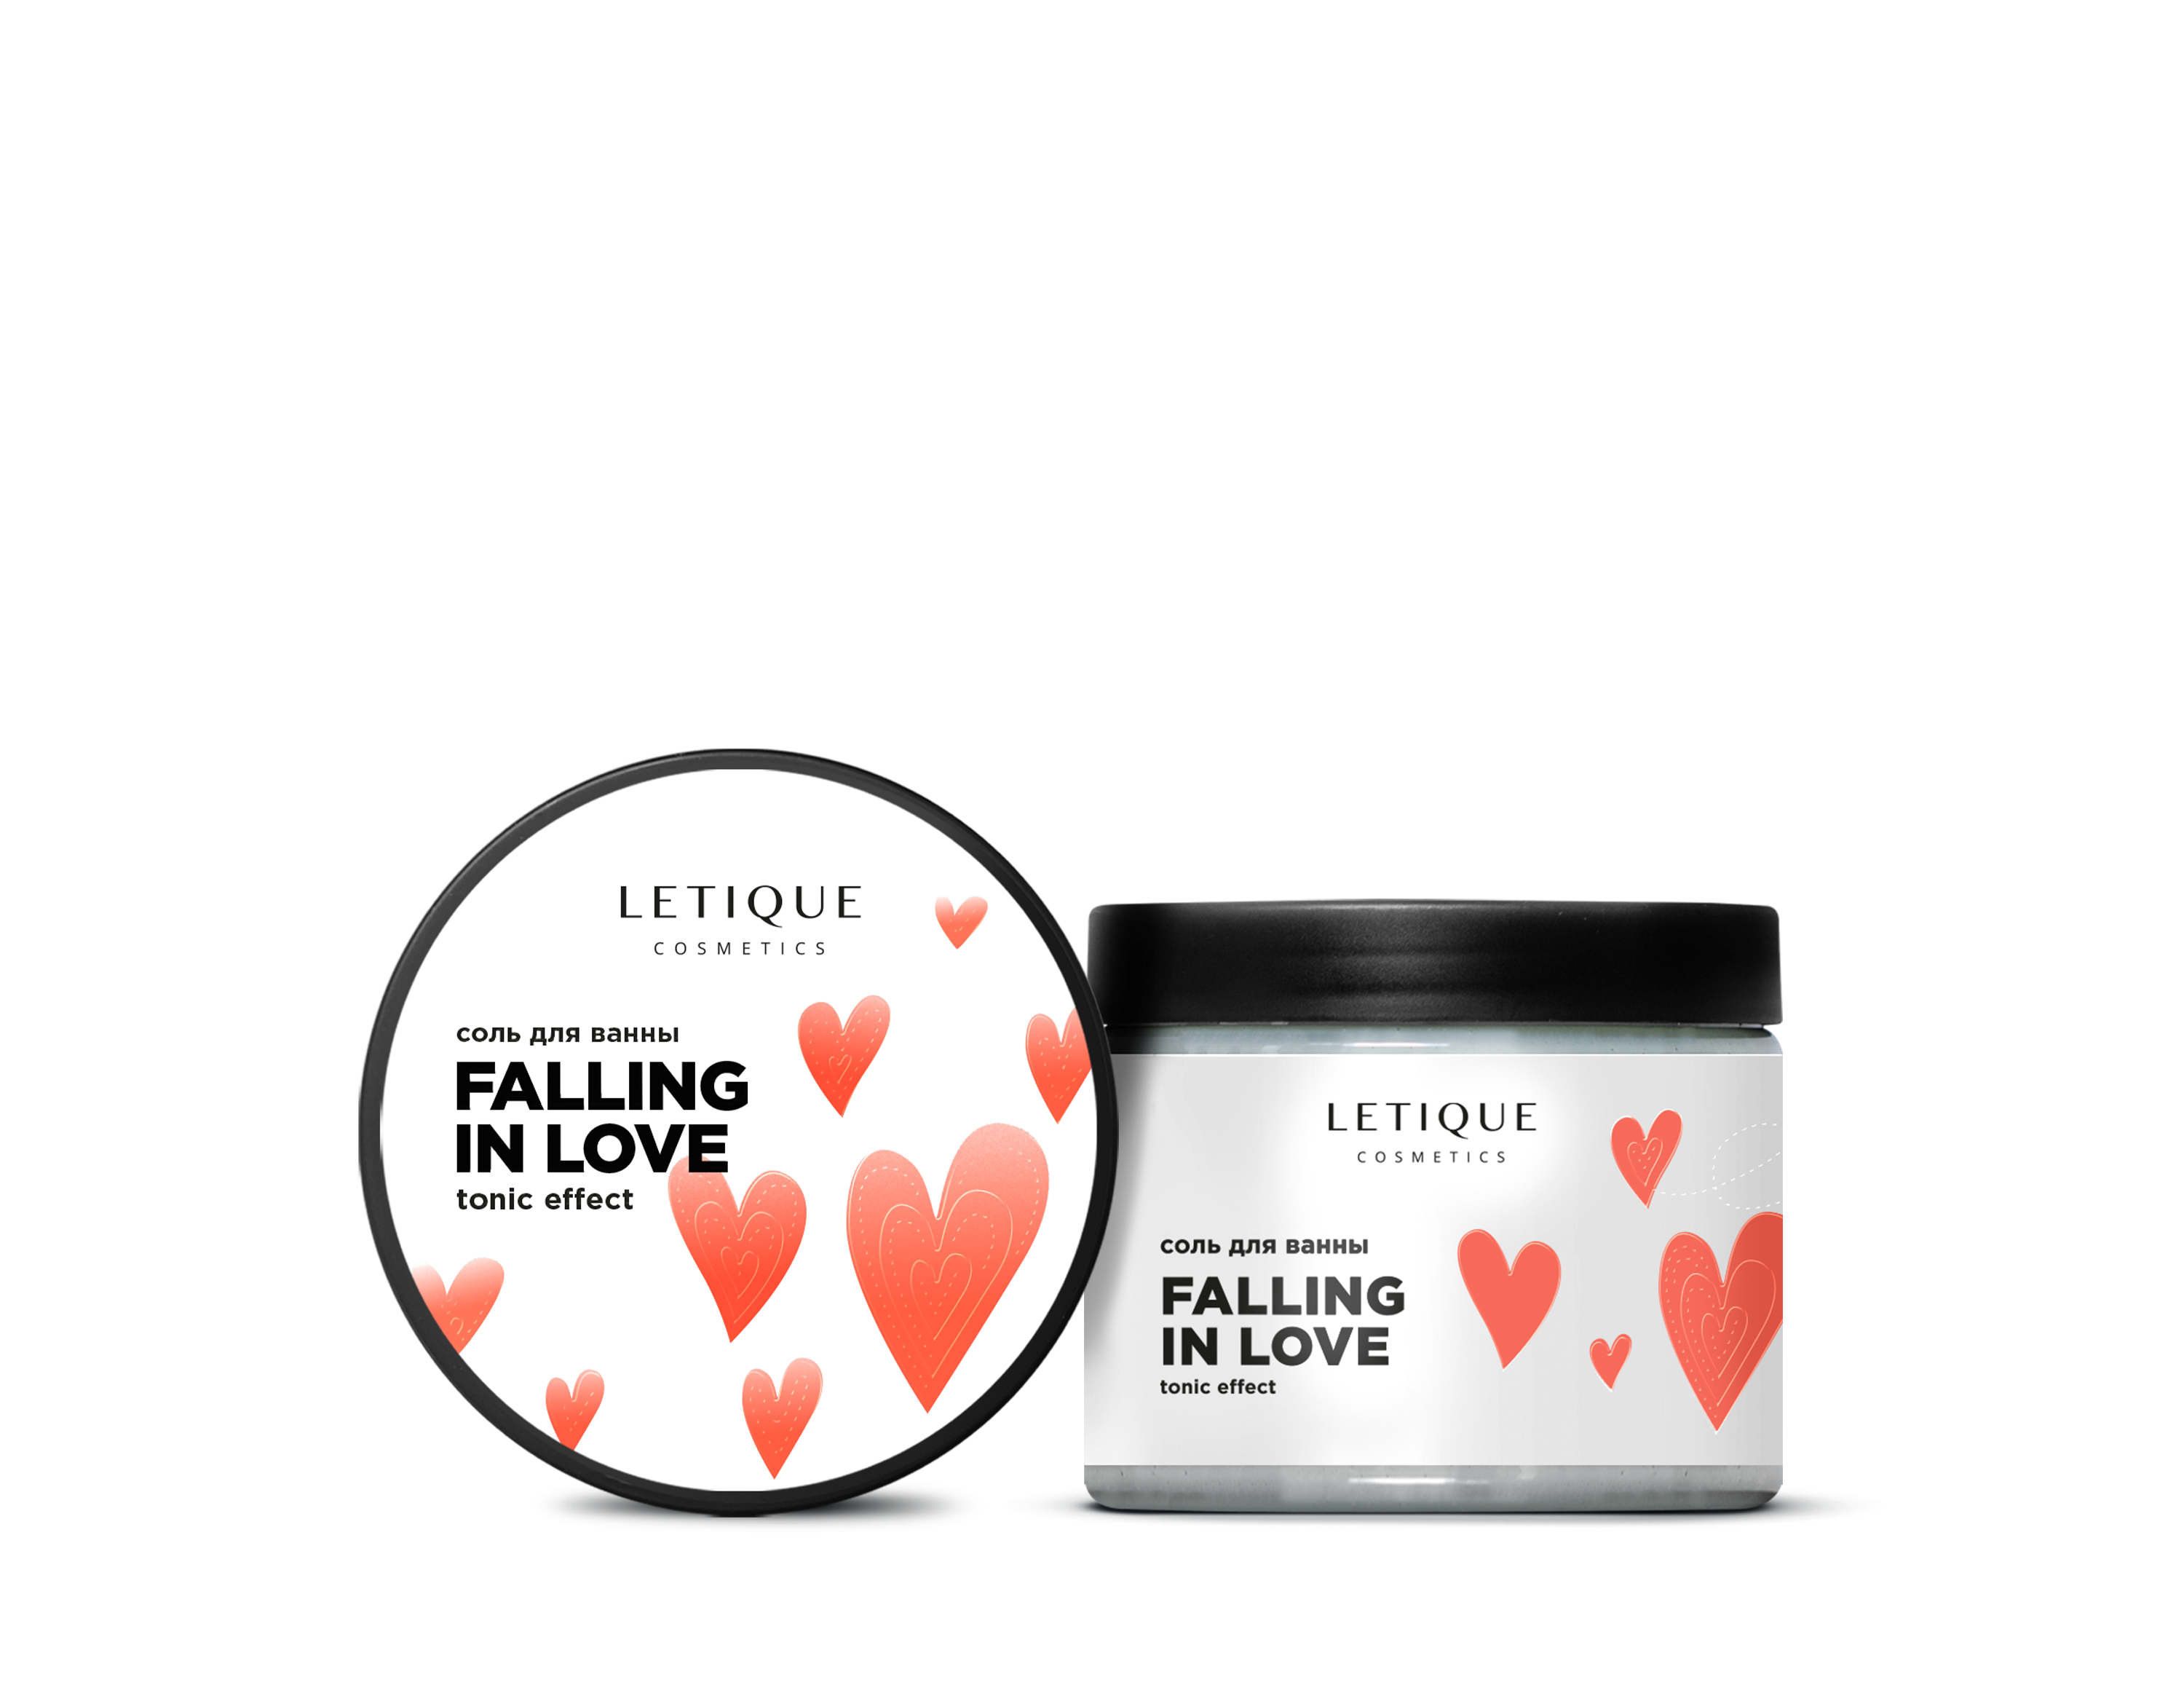 Соль для ванны Letique Cosmetics FALLING IN LOVE - фото 1